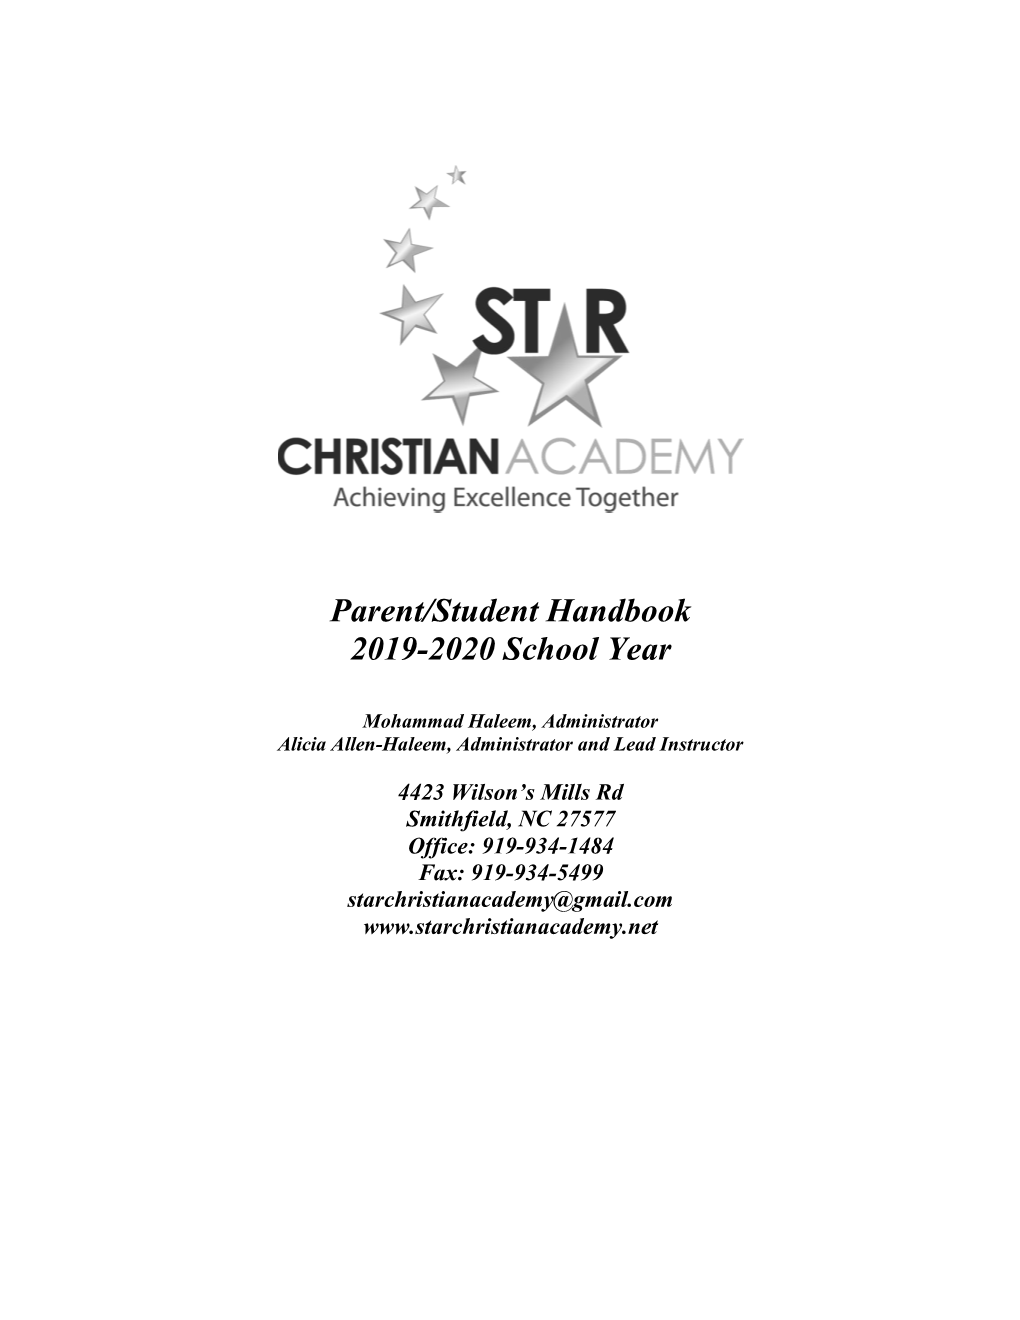 Parent/Student Handbook 2019-2020 School Year